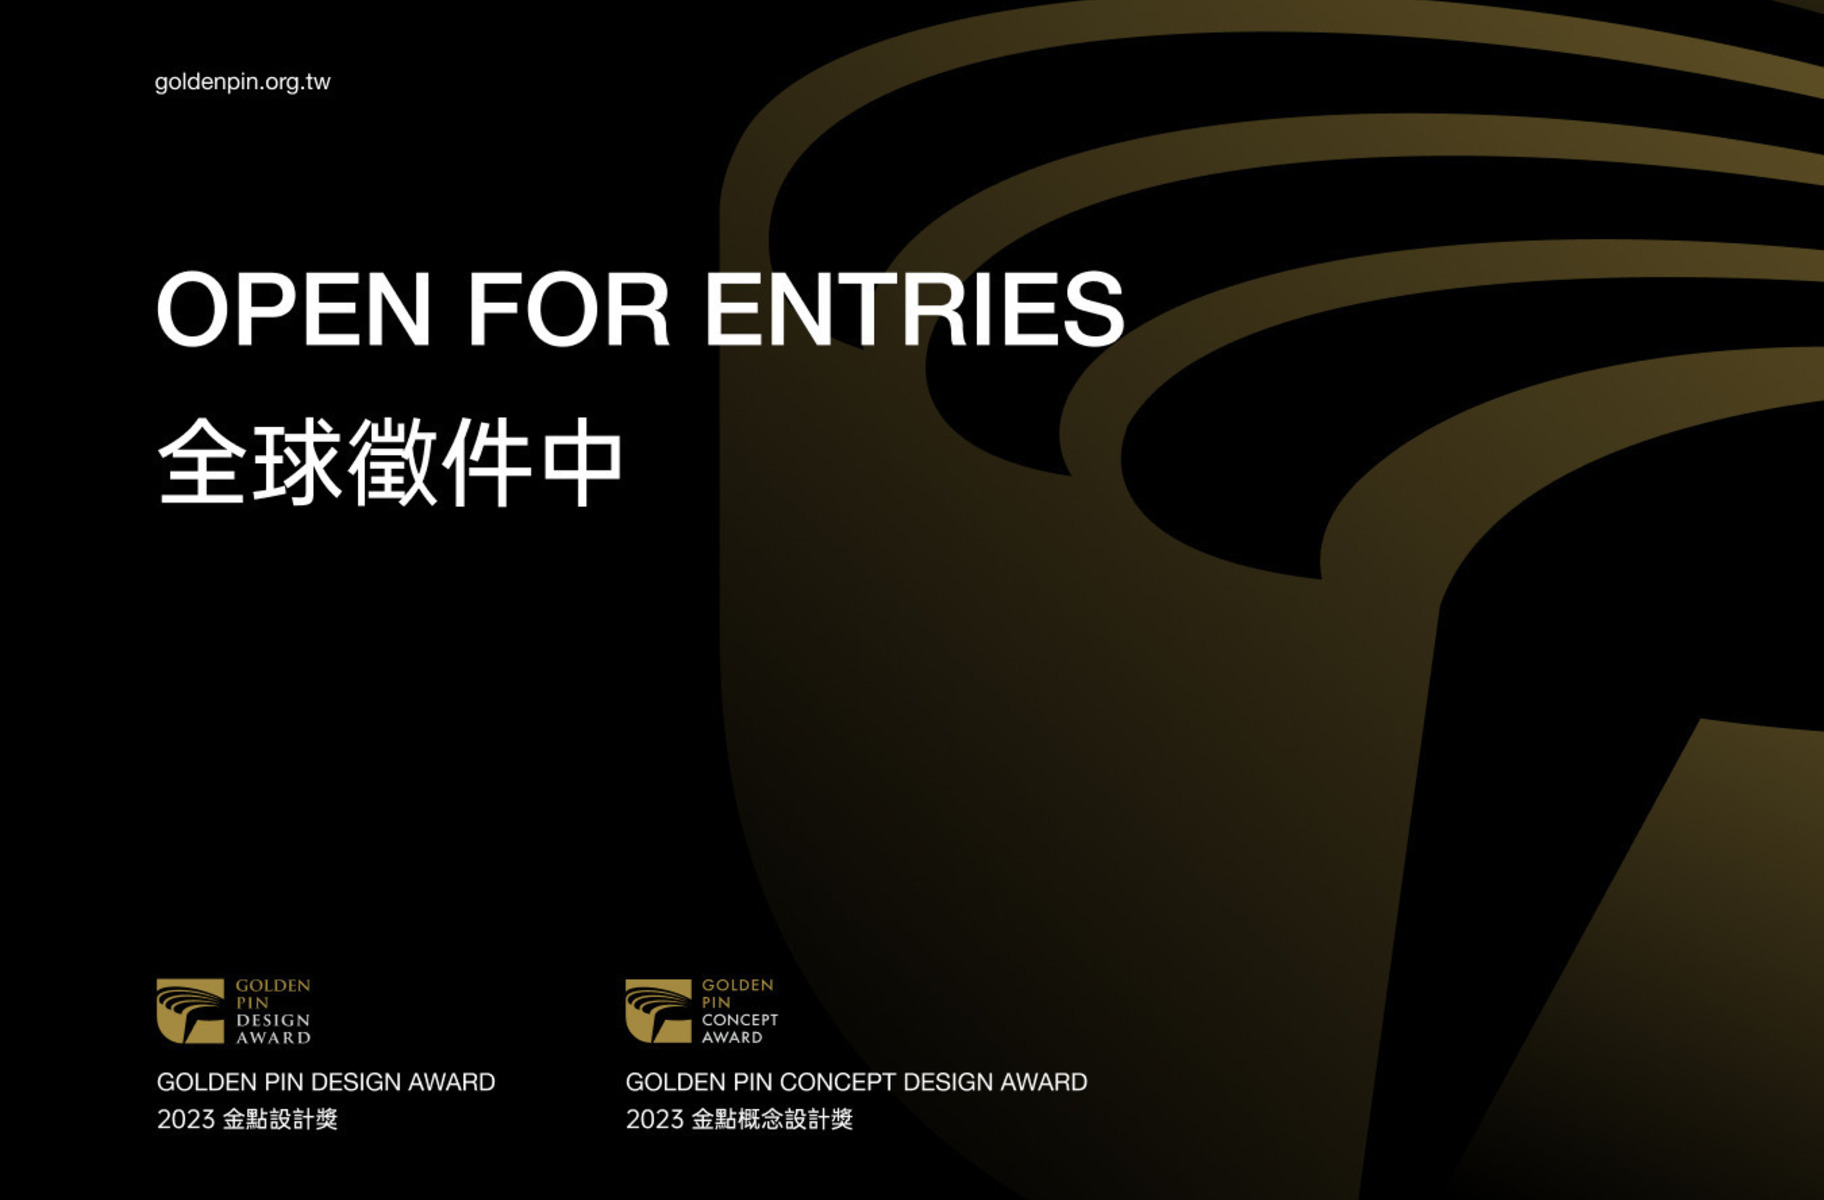  2023 Golden Pin Design Award and Golden Pin Concept Design Award: Call for Global Entries is Now Open!